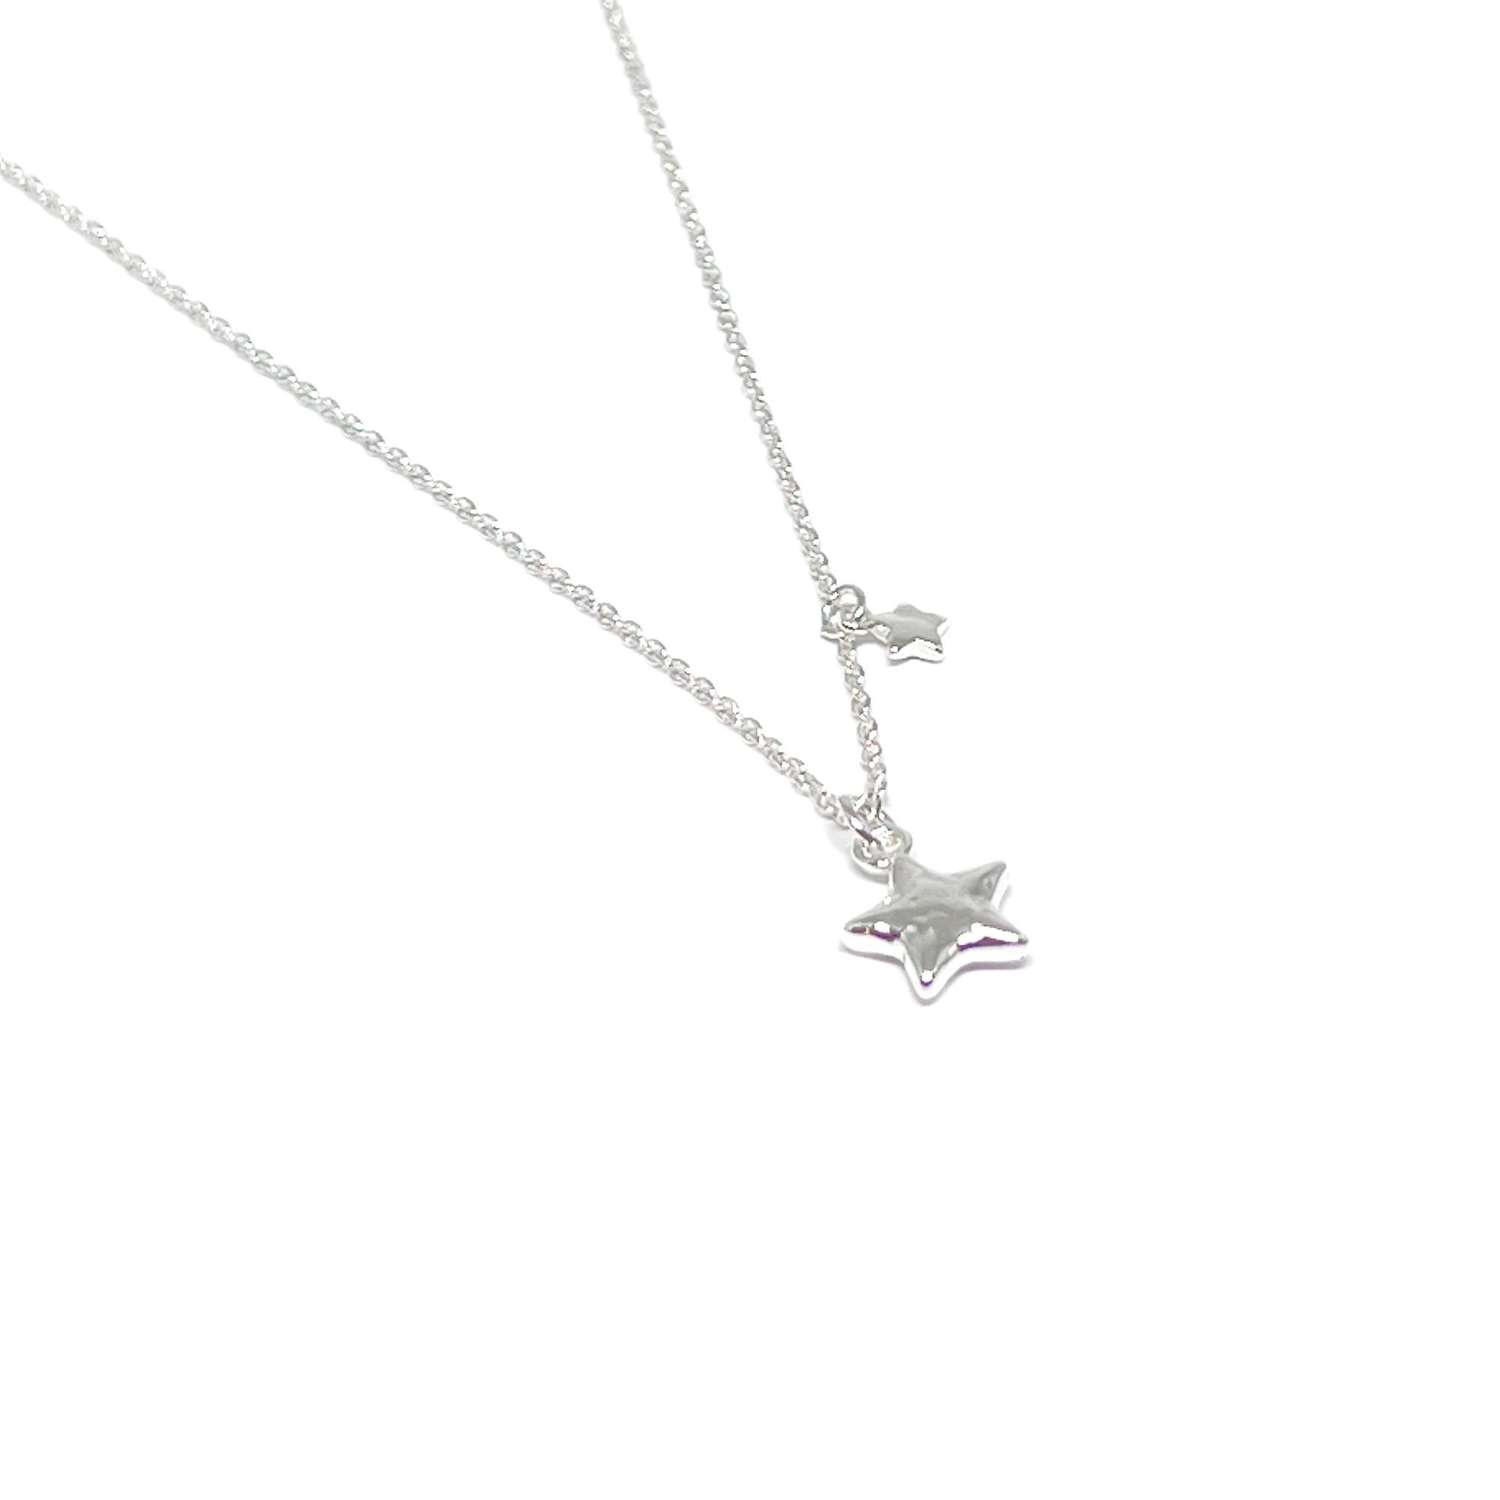 Rio Star Necklace - Silver